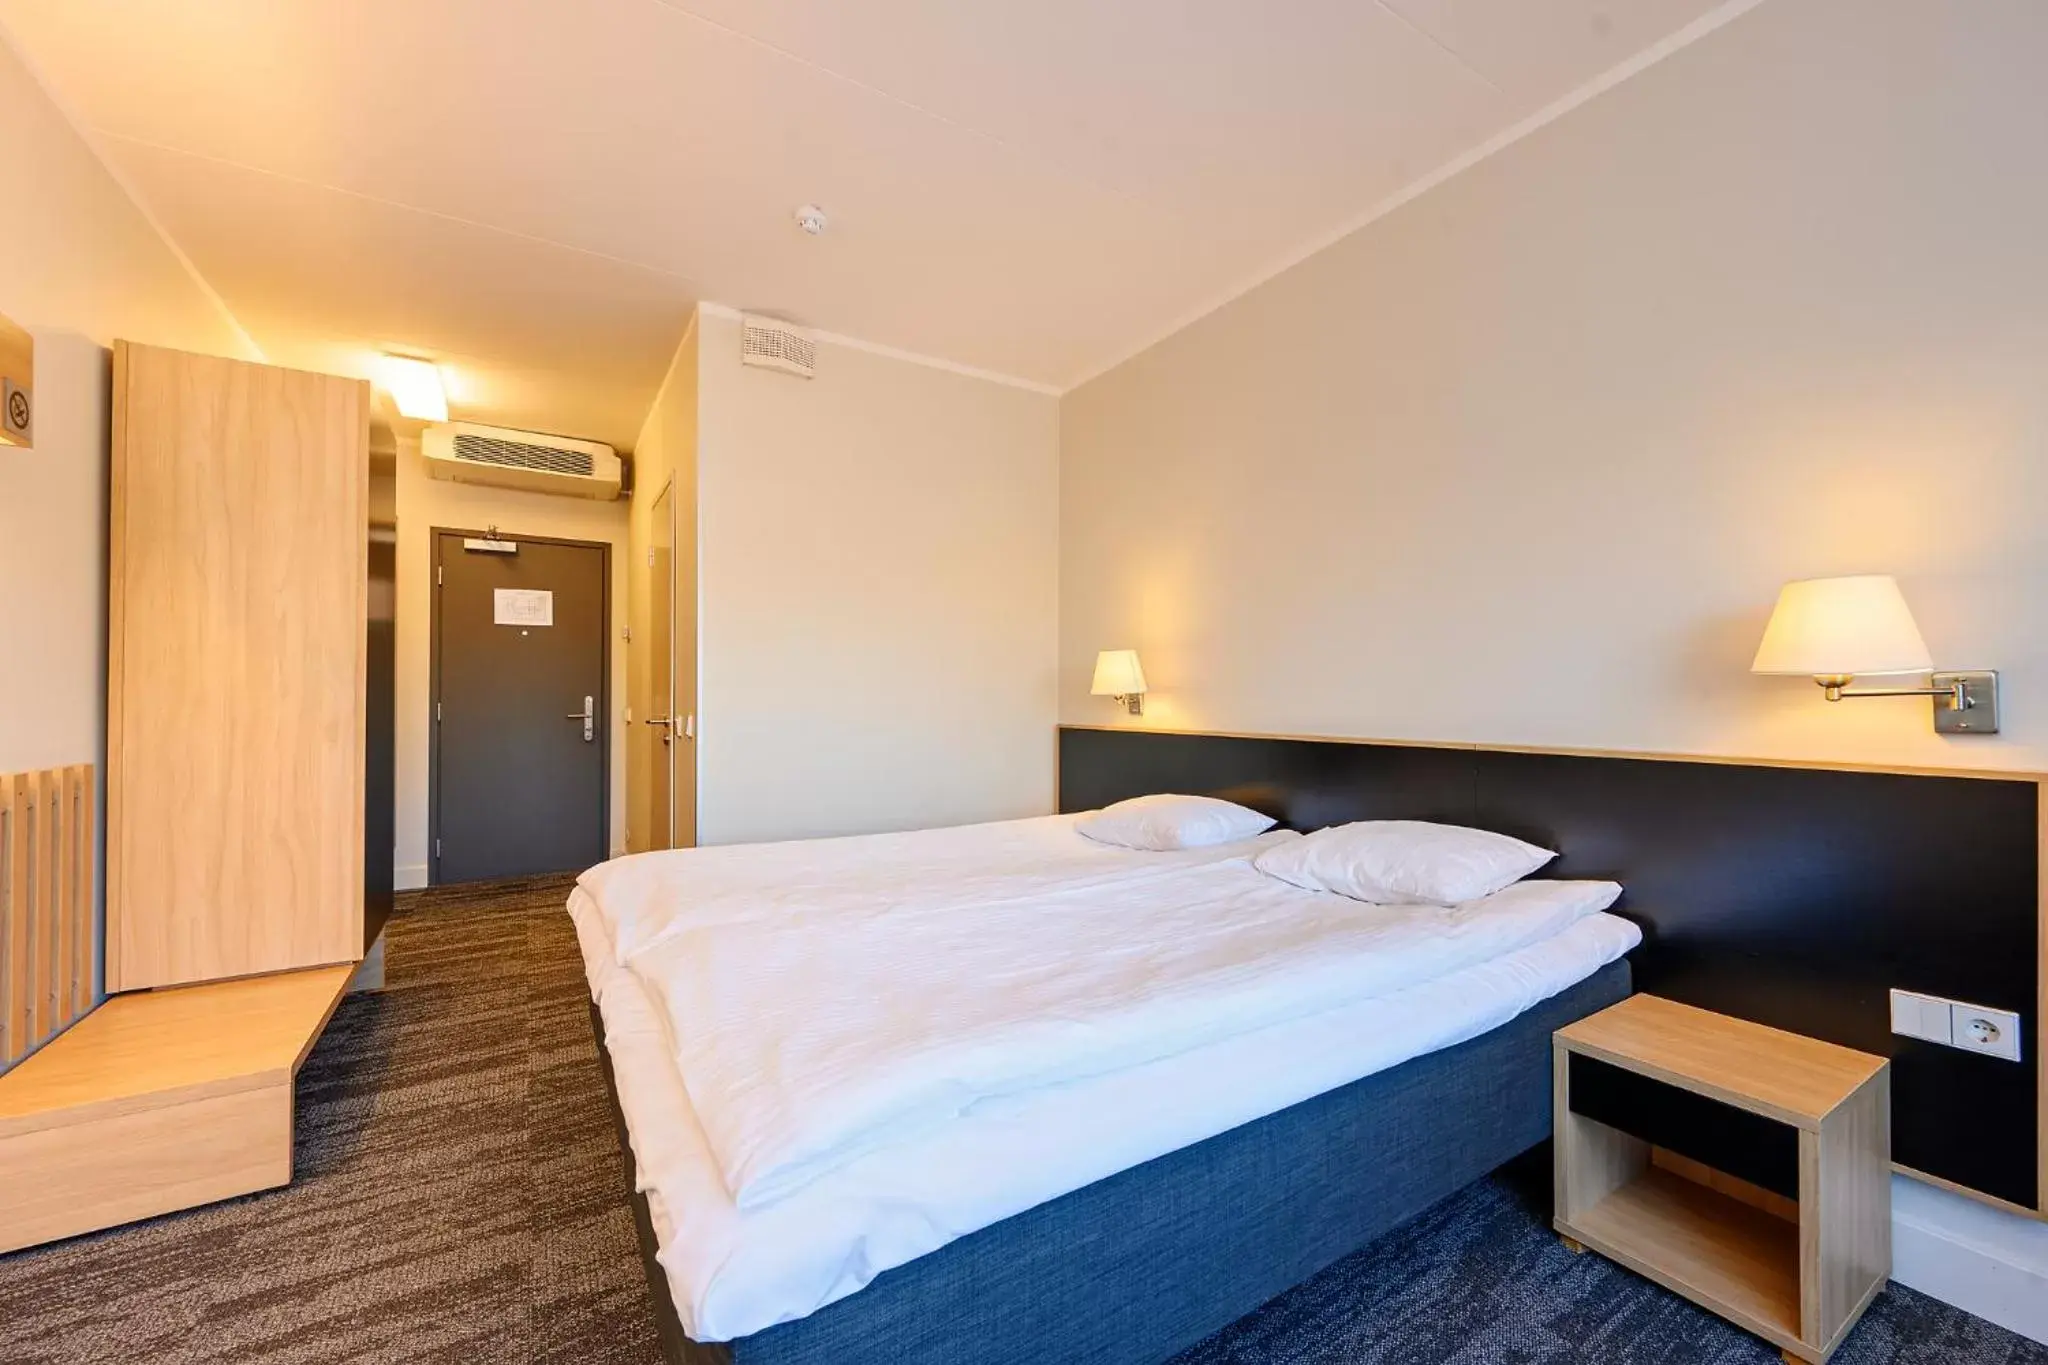 Bedroom, Bed in Dorpat Hotel